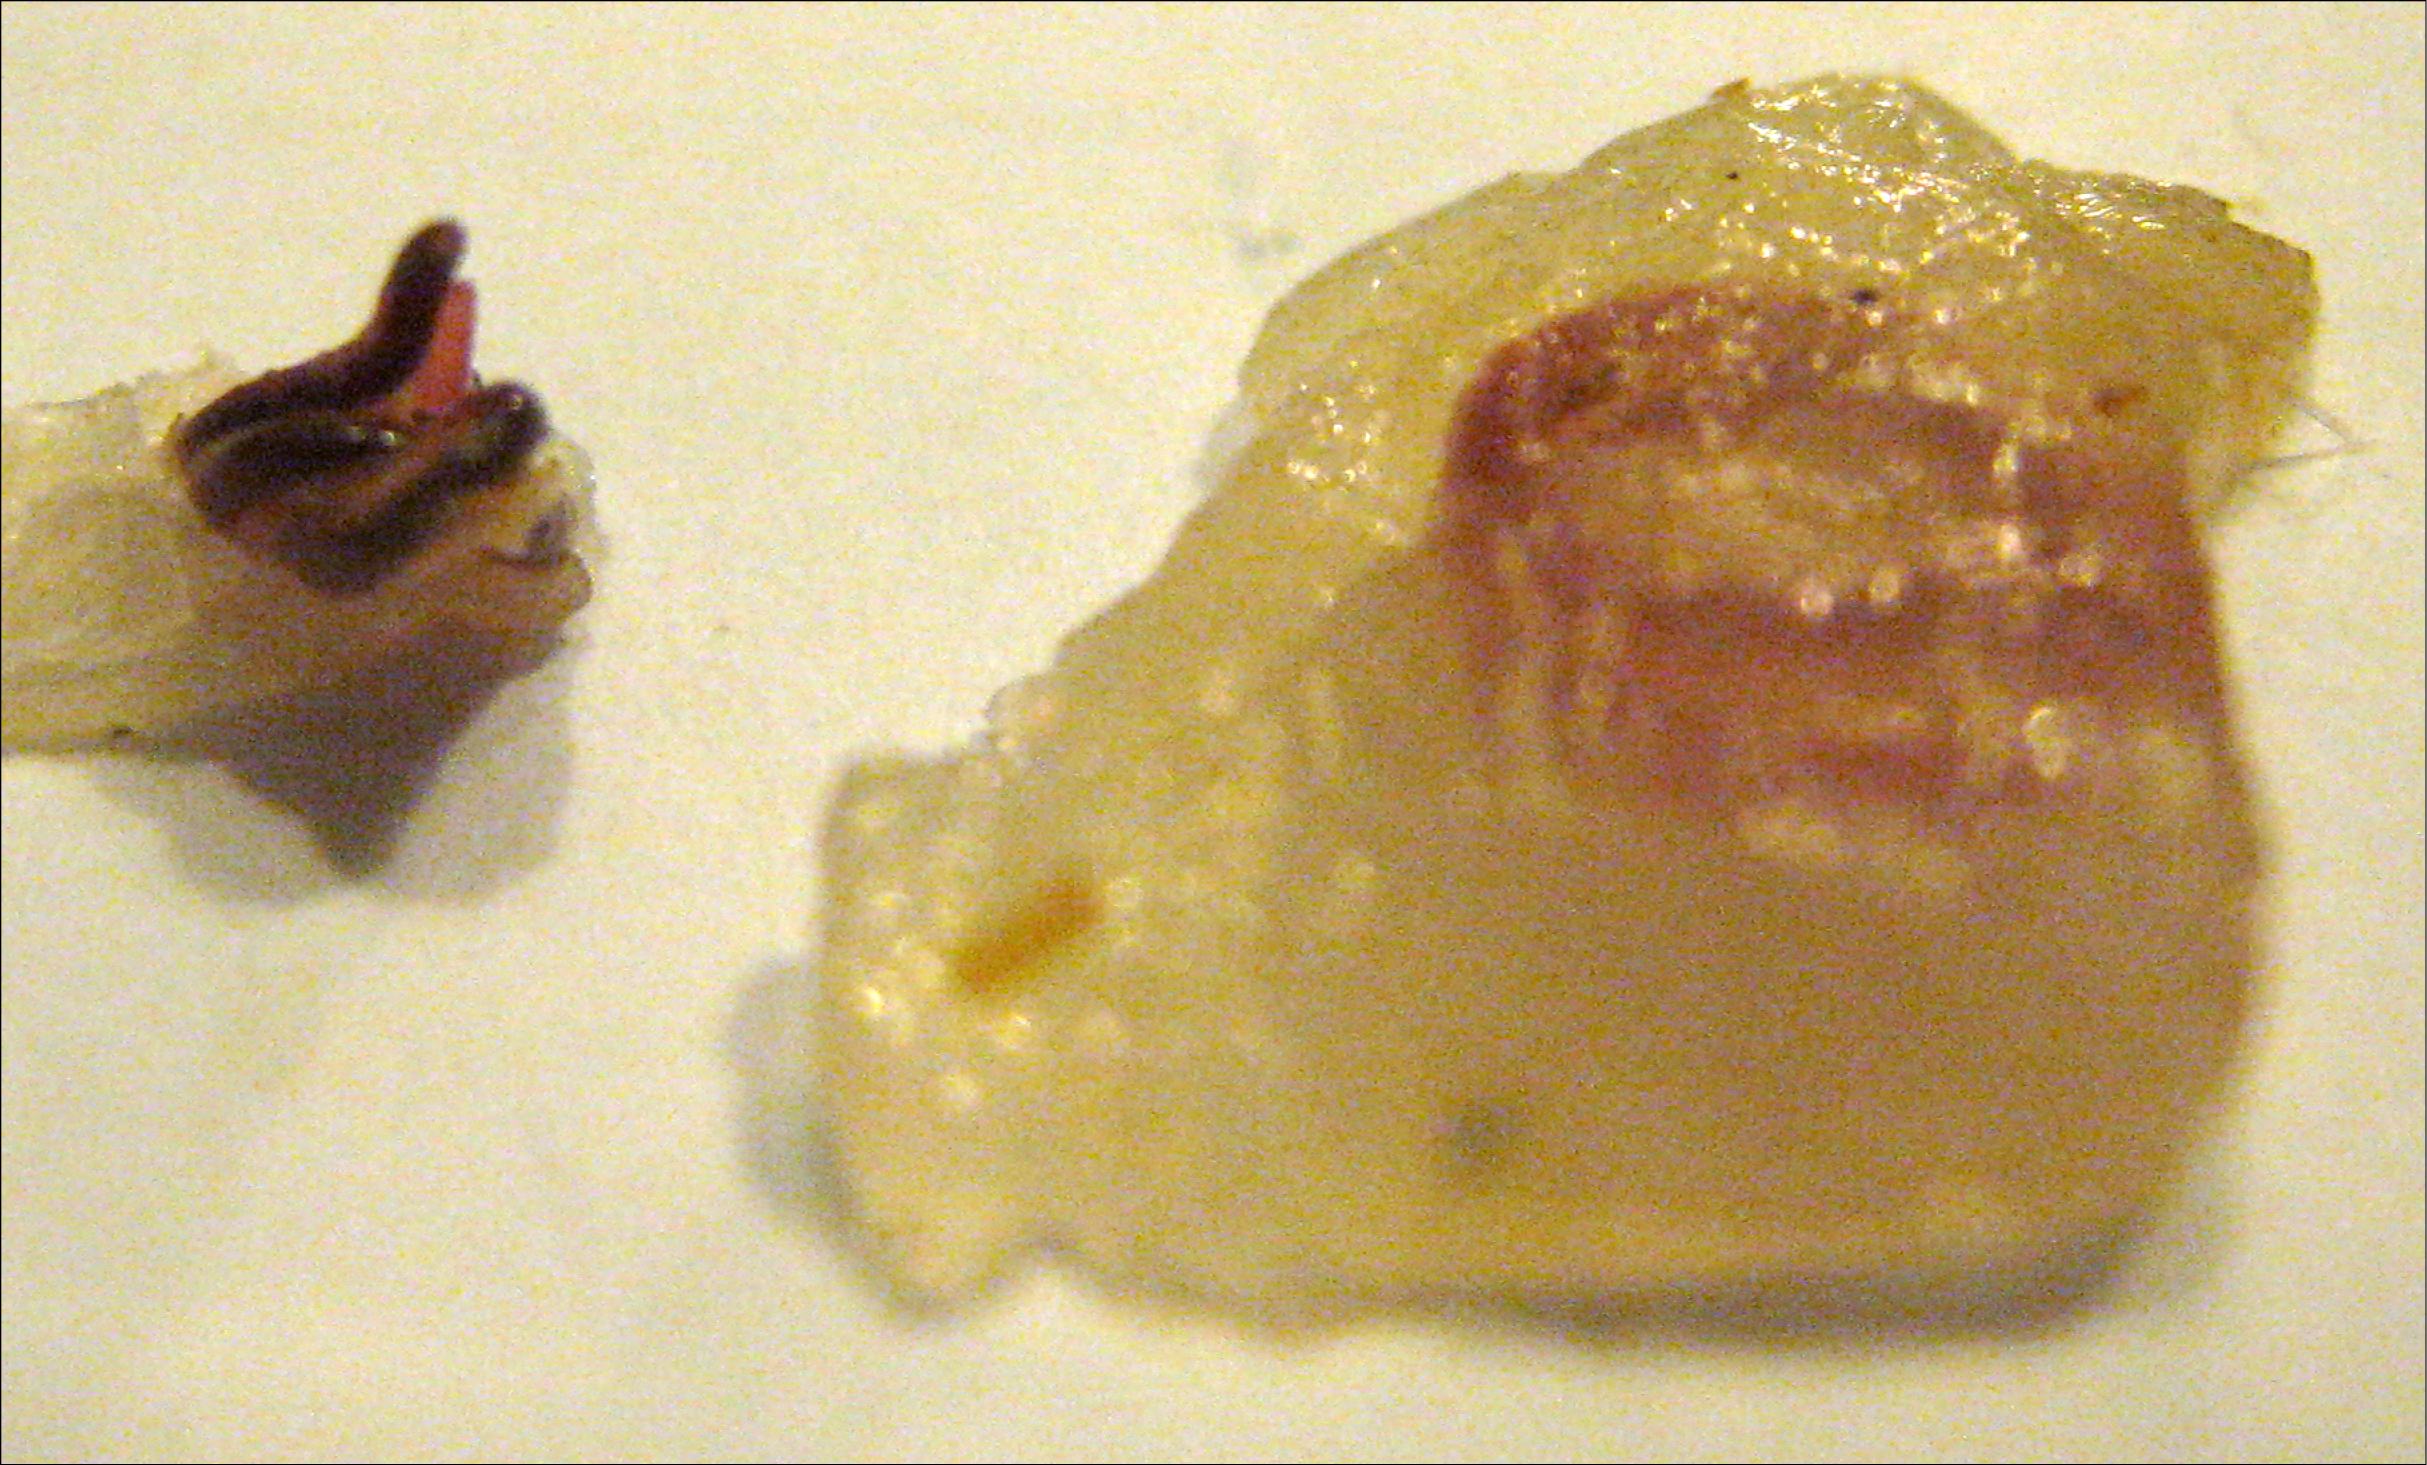    Fig. 19.4-3.  Larvas de  Pseudoterranova decipiens  (proporcionado por la Dra. Beata Szostakowska)  